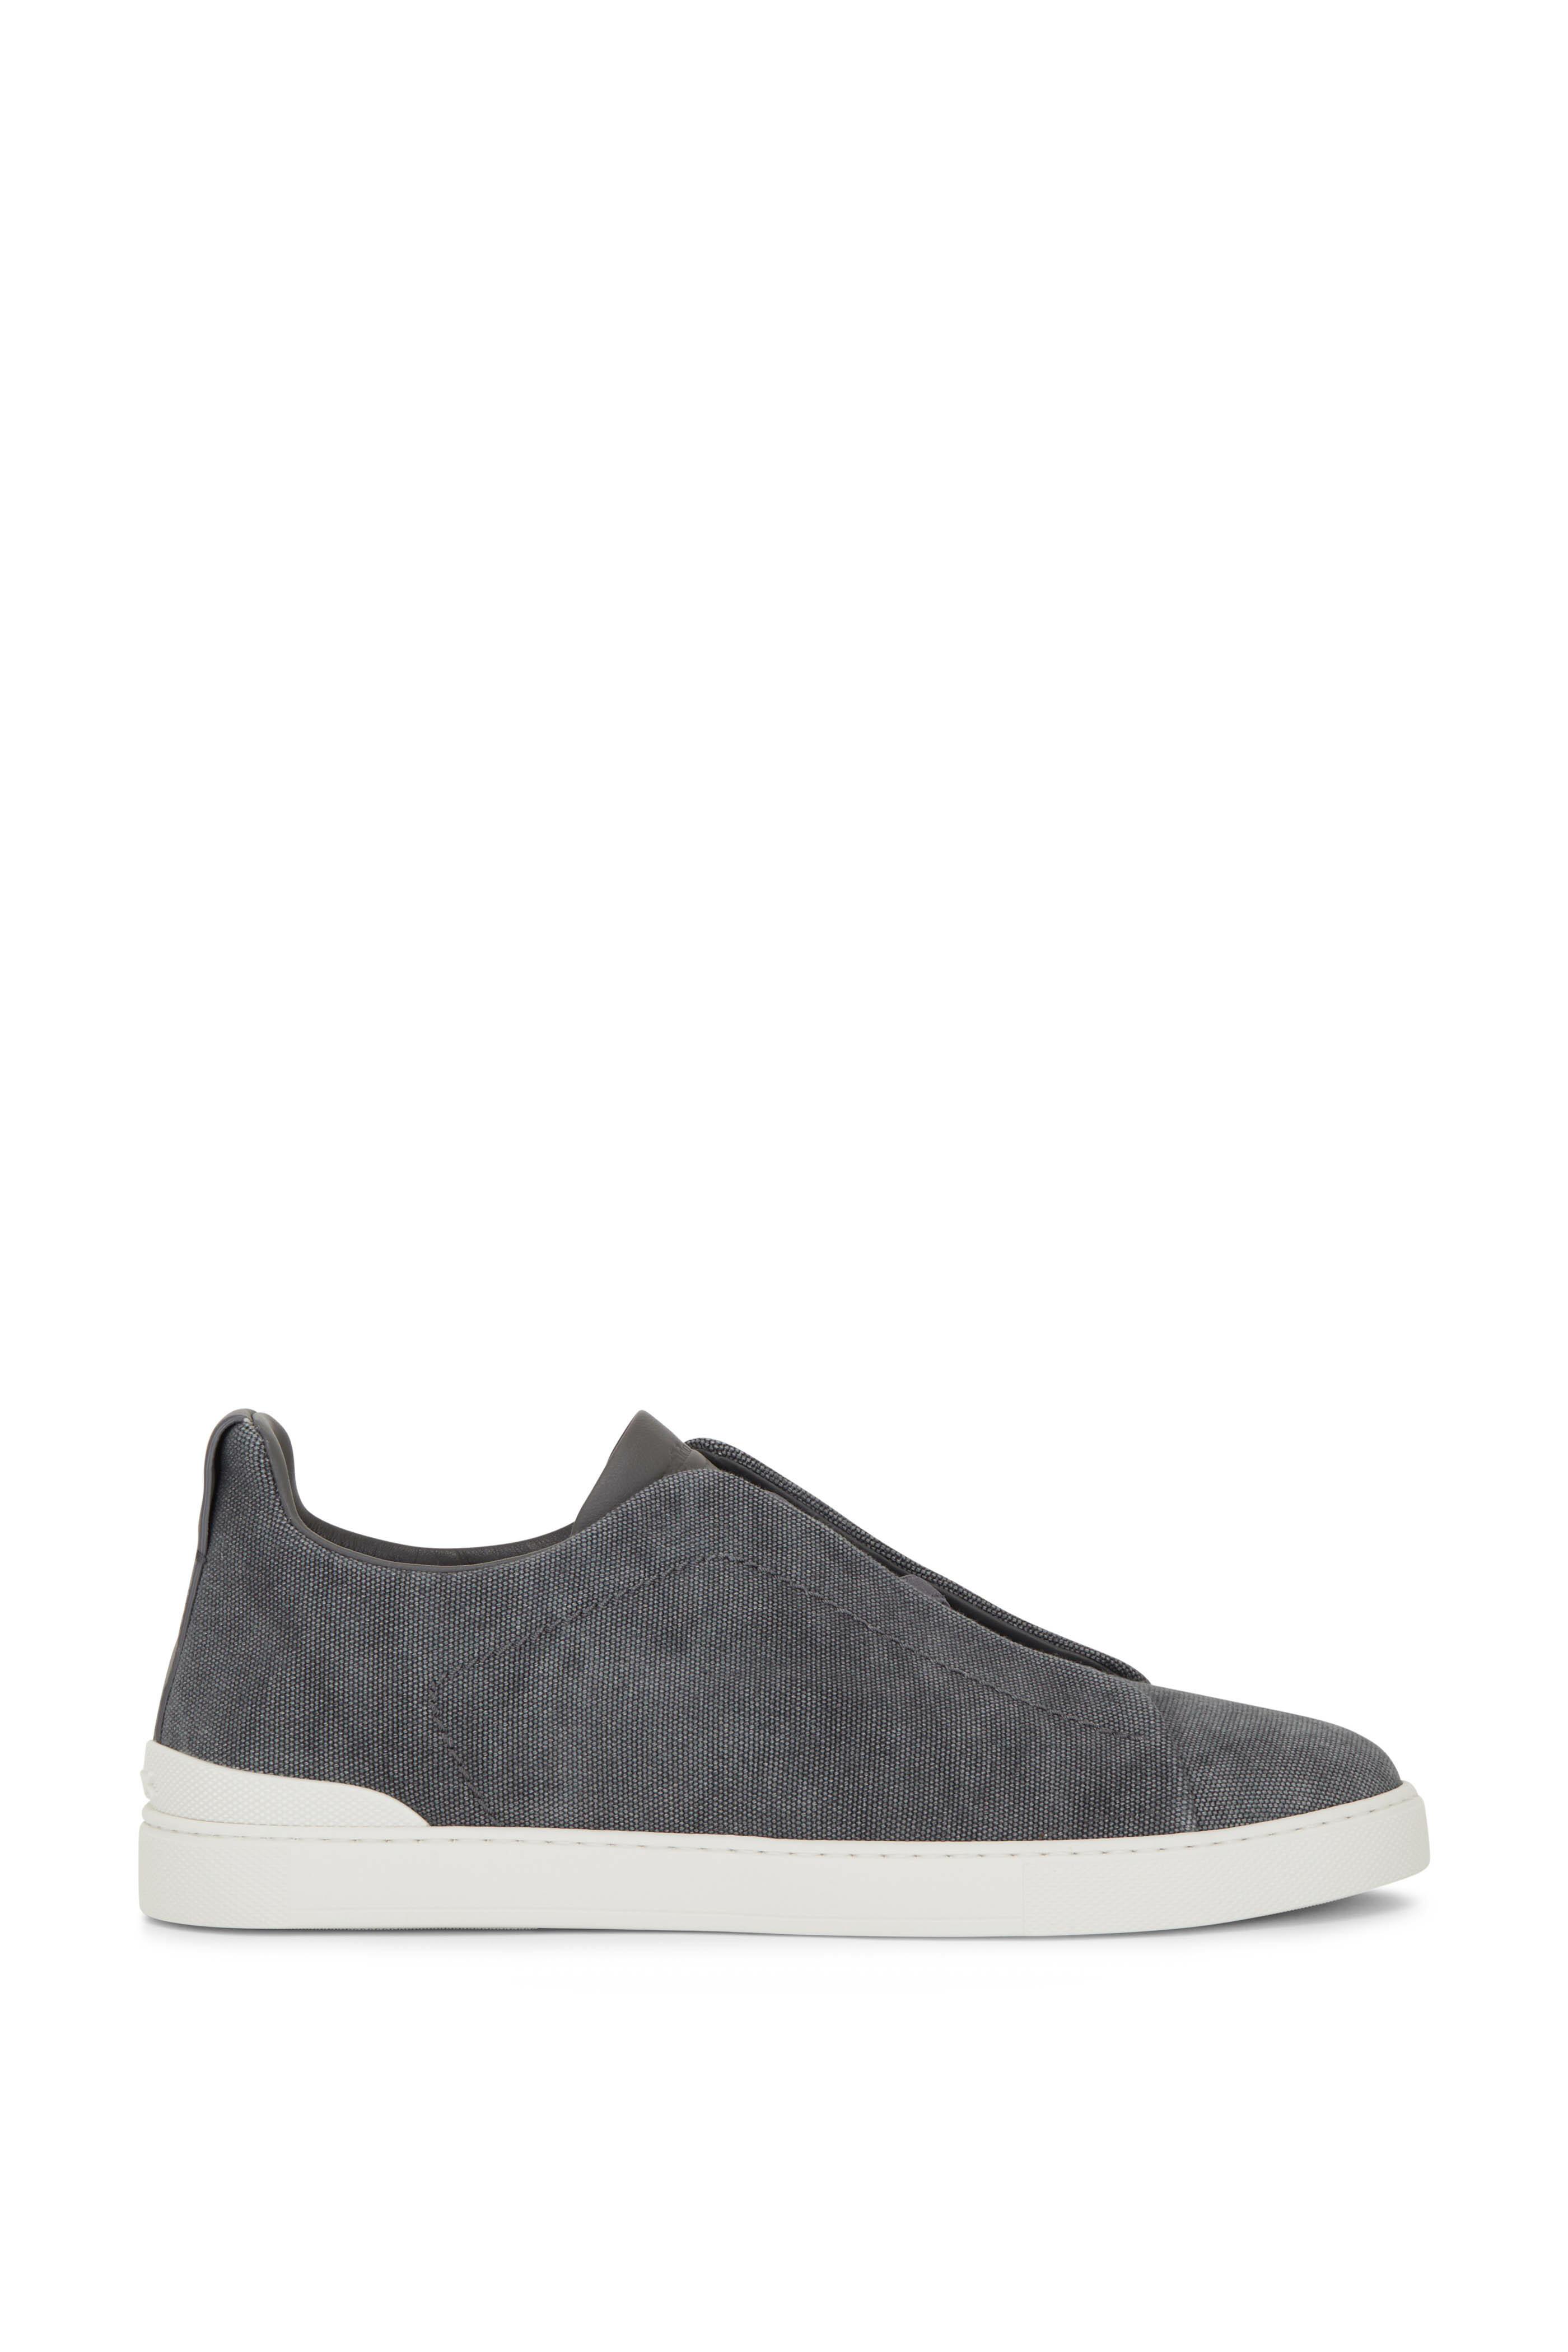 Zegna - Triple Stitch Gray Wool Low Top Sneaker